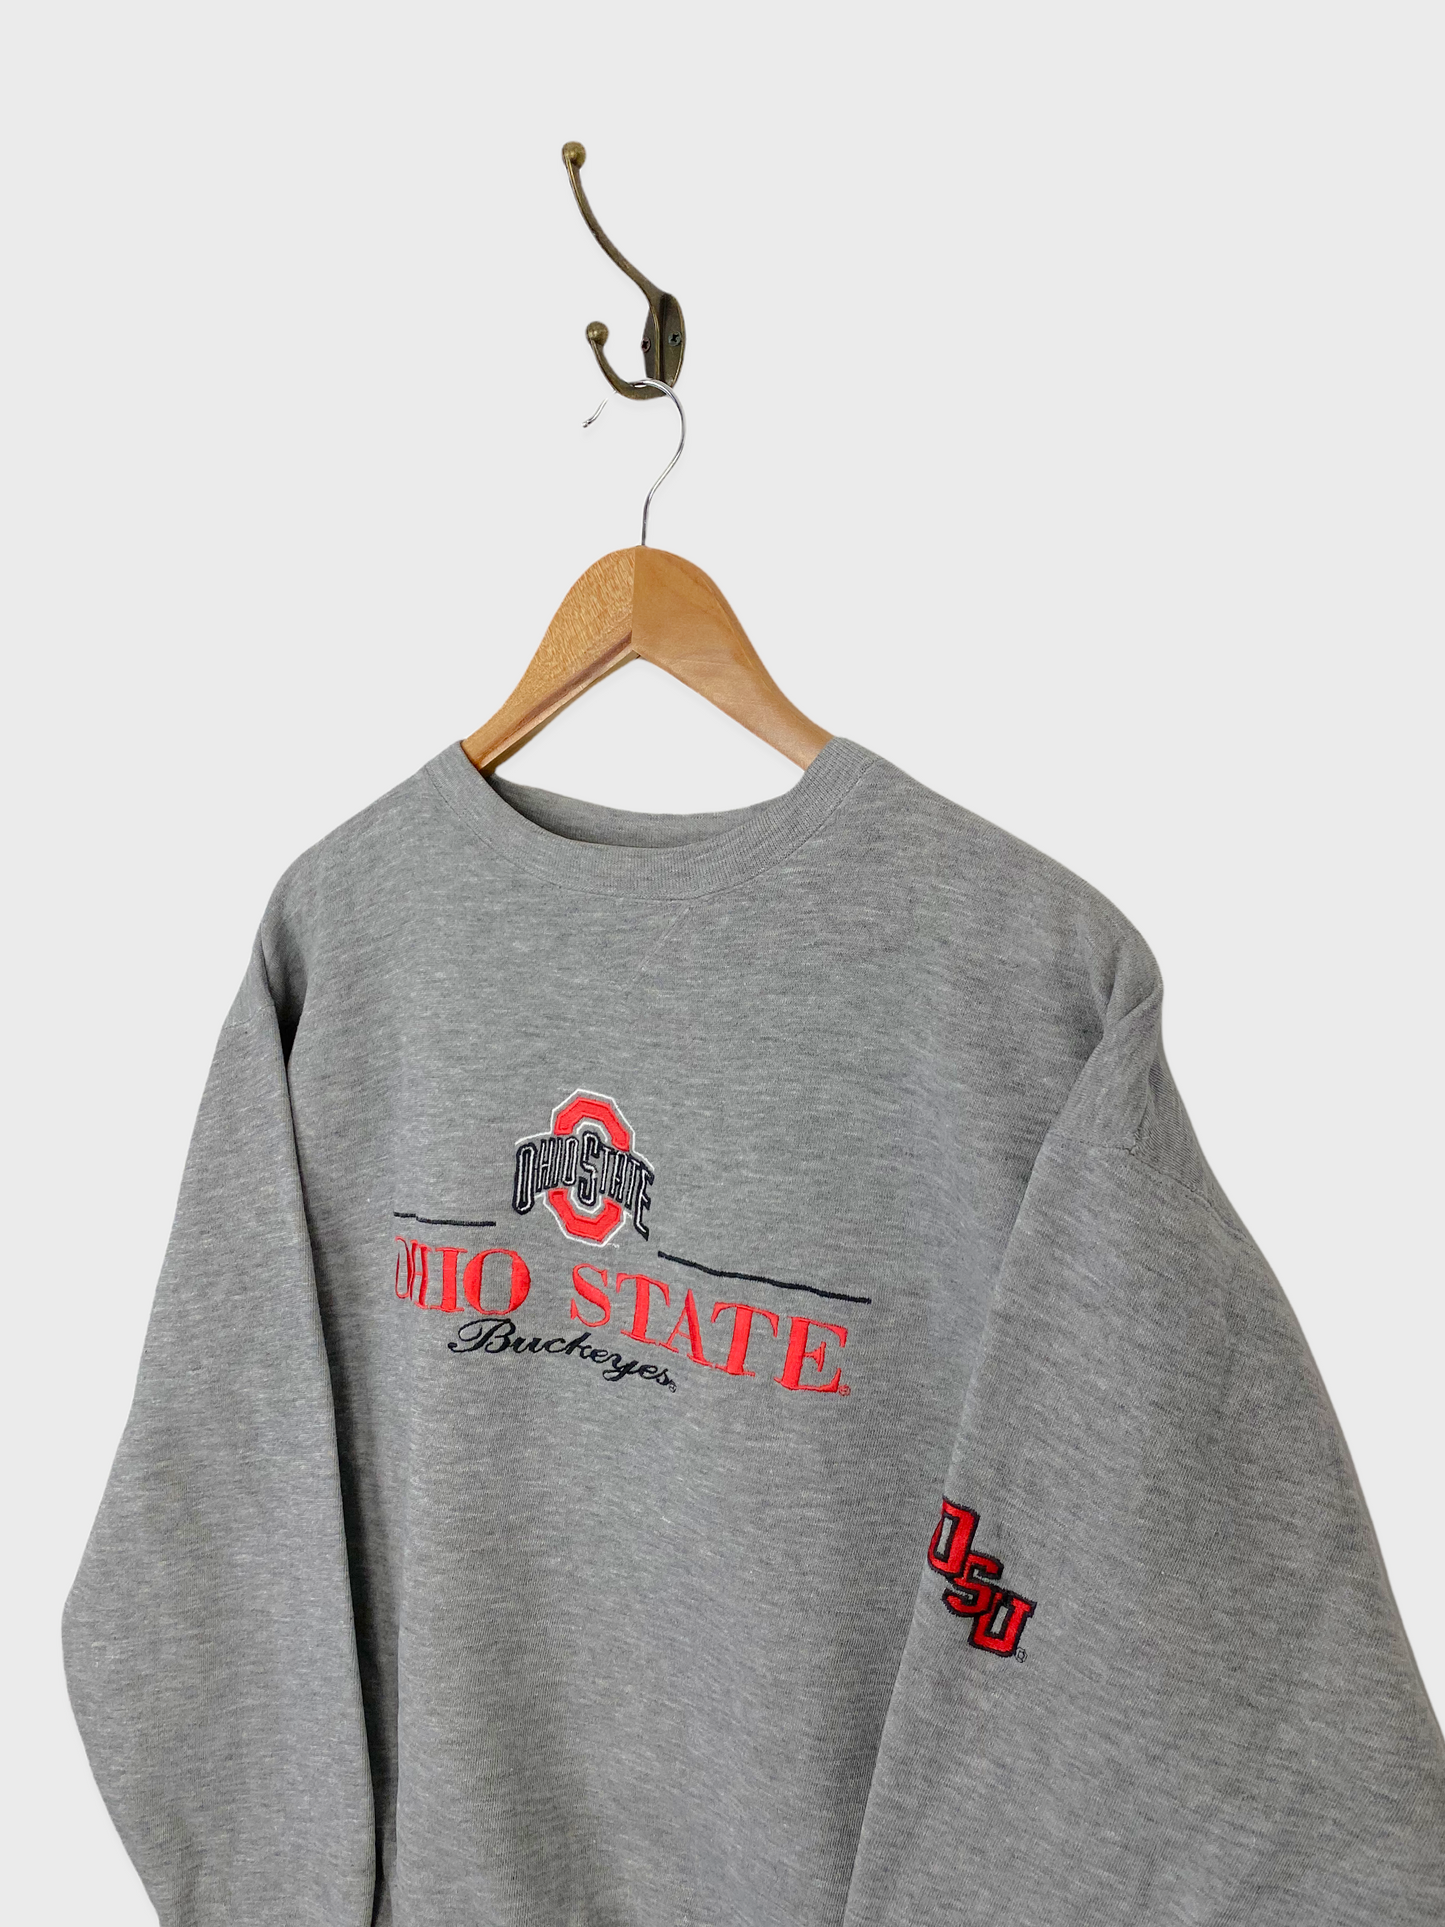 90's Ohio State Buckeyes Embroidered Vintage Sweatshirt Size 8